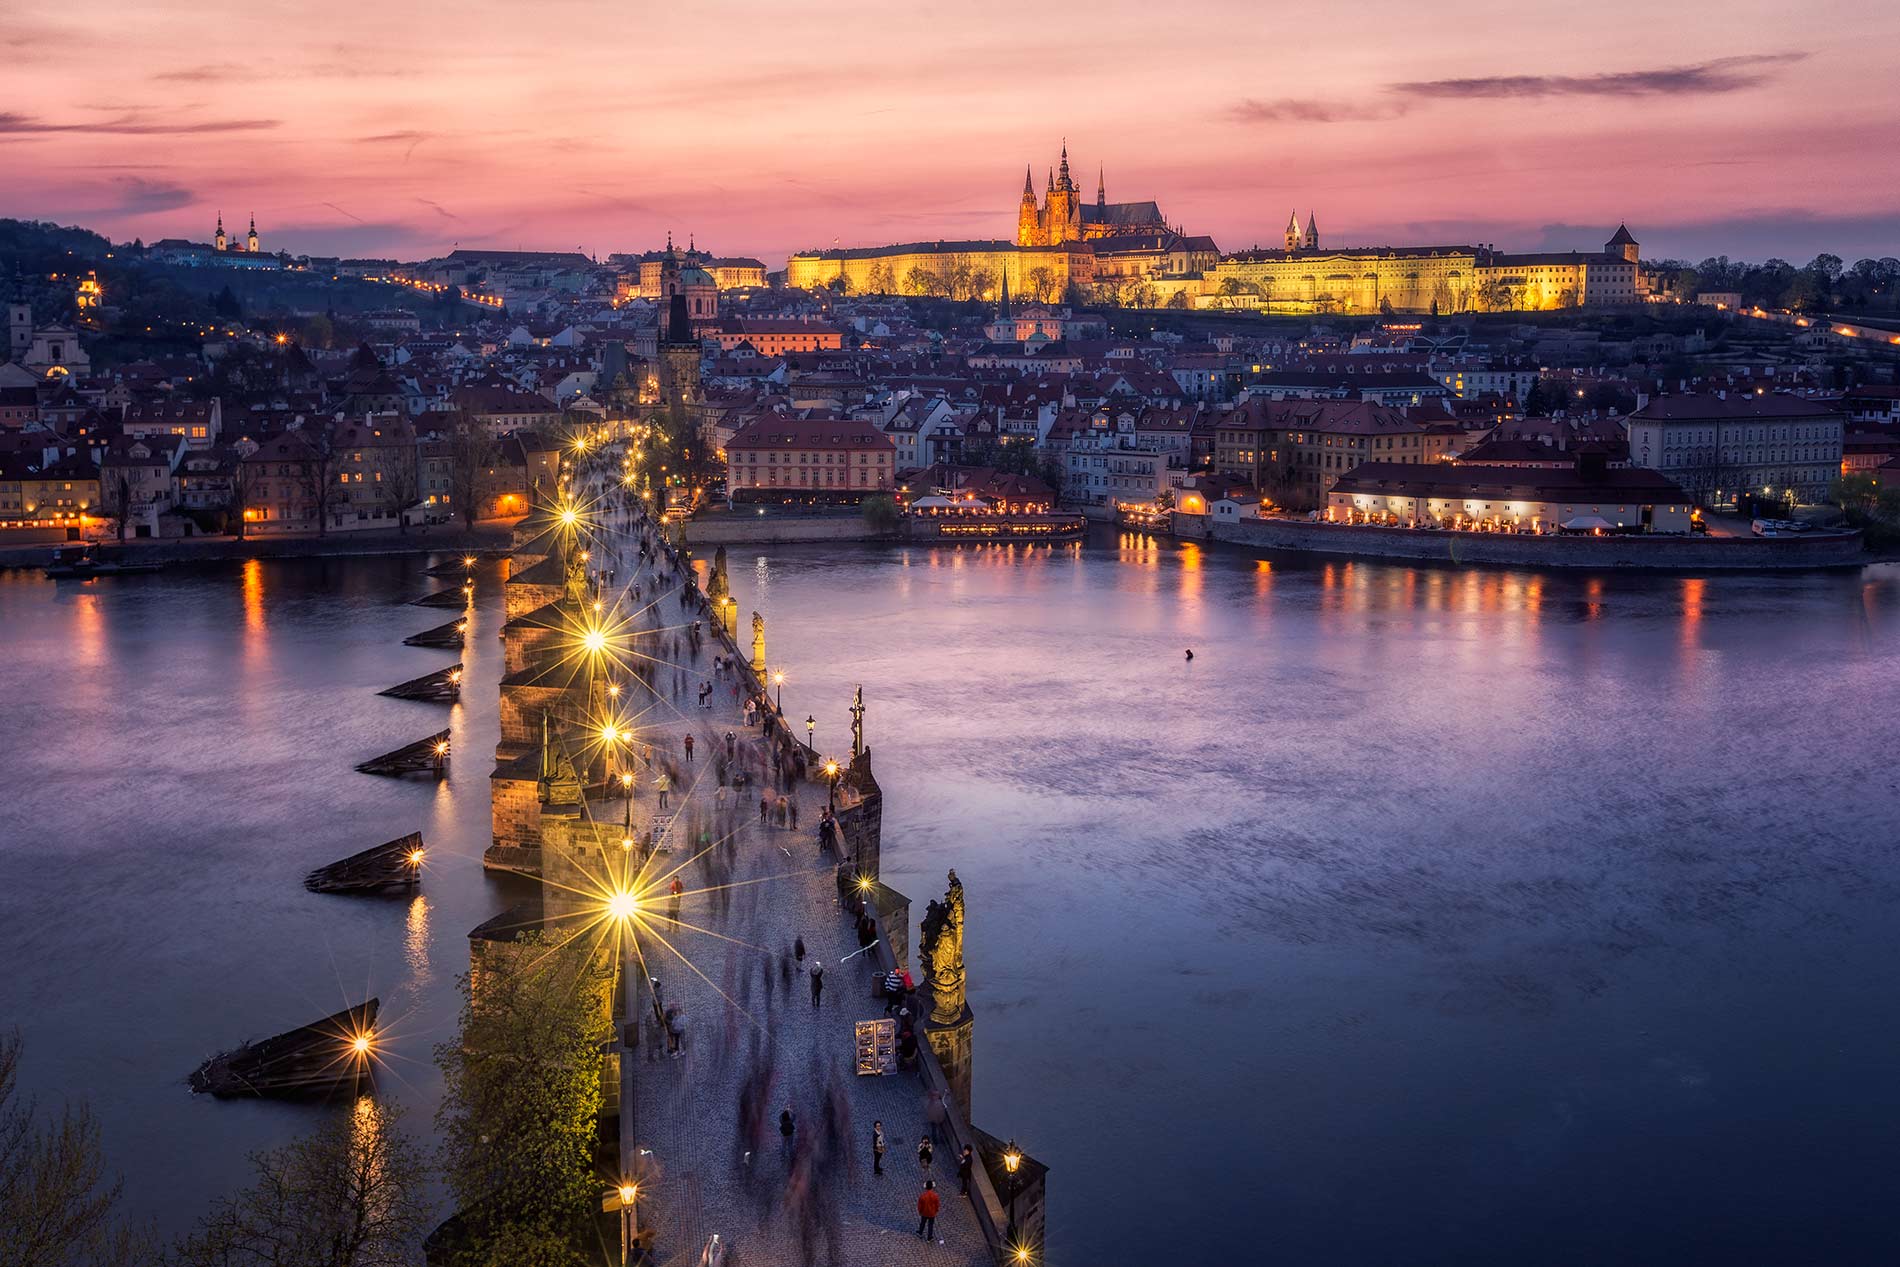 Prague Photo Tours | Explore Prague With Professional Photographer